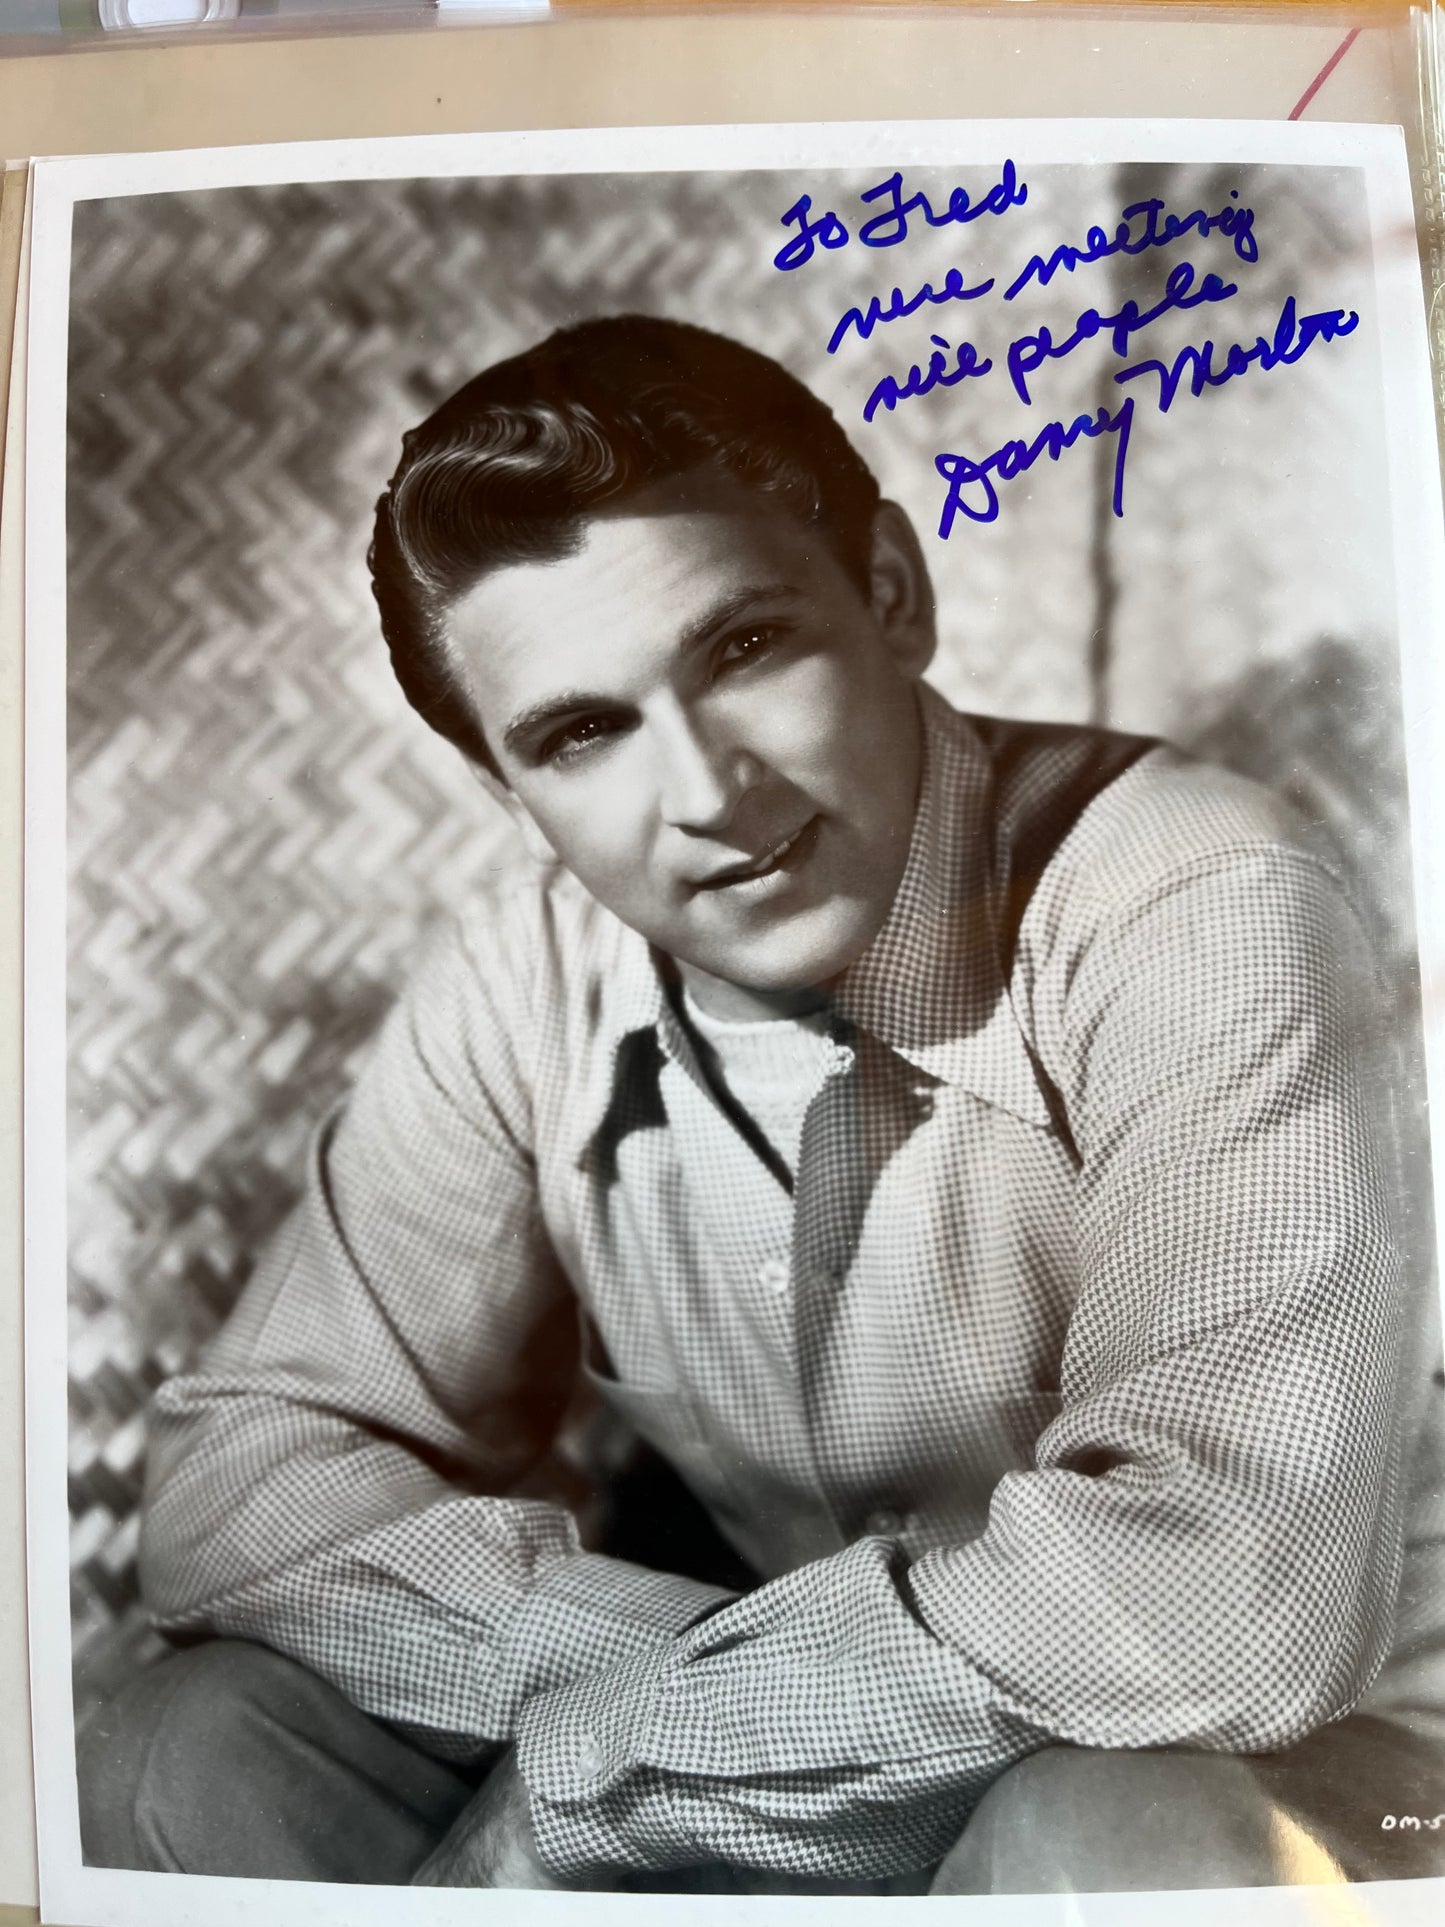 DANNY MORTON, actor, autograph